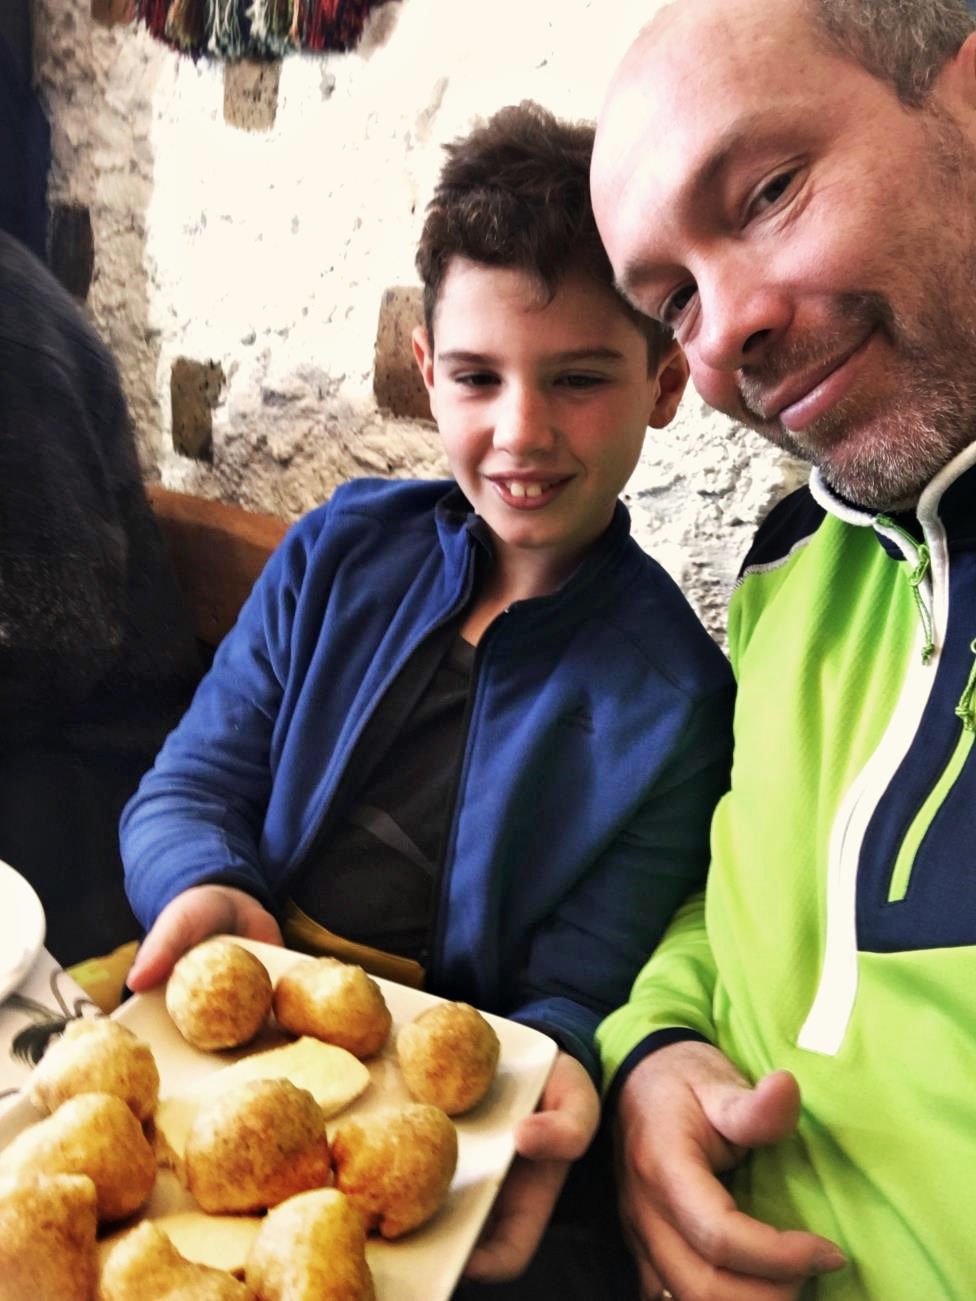 Yummy ustipci pastry with cottage cheese at Rajska Vrata Restaurant Jahorina. My son and I are enjoying